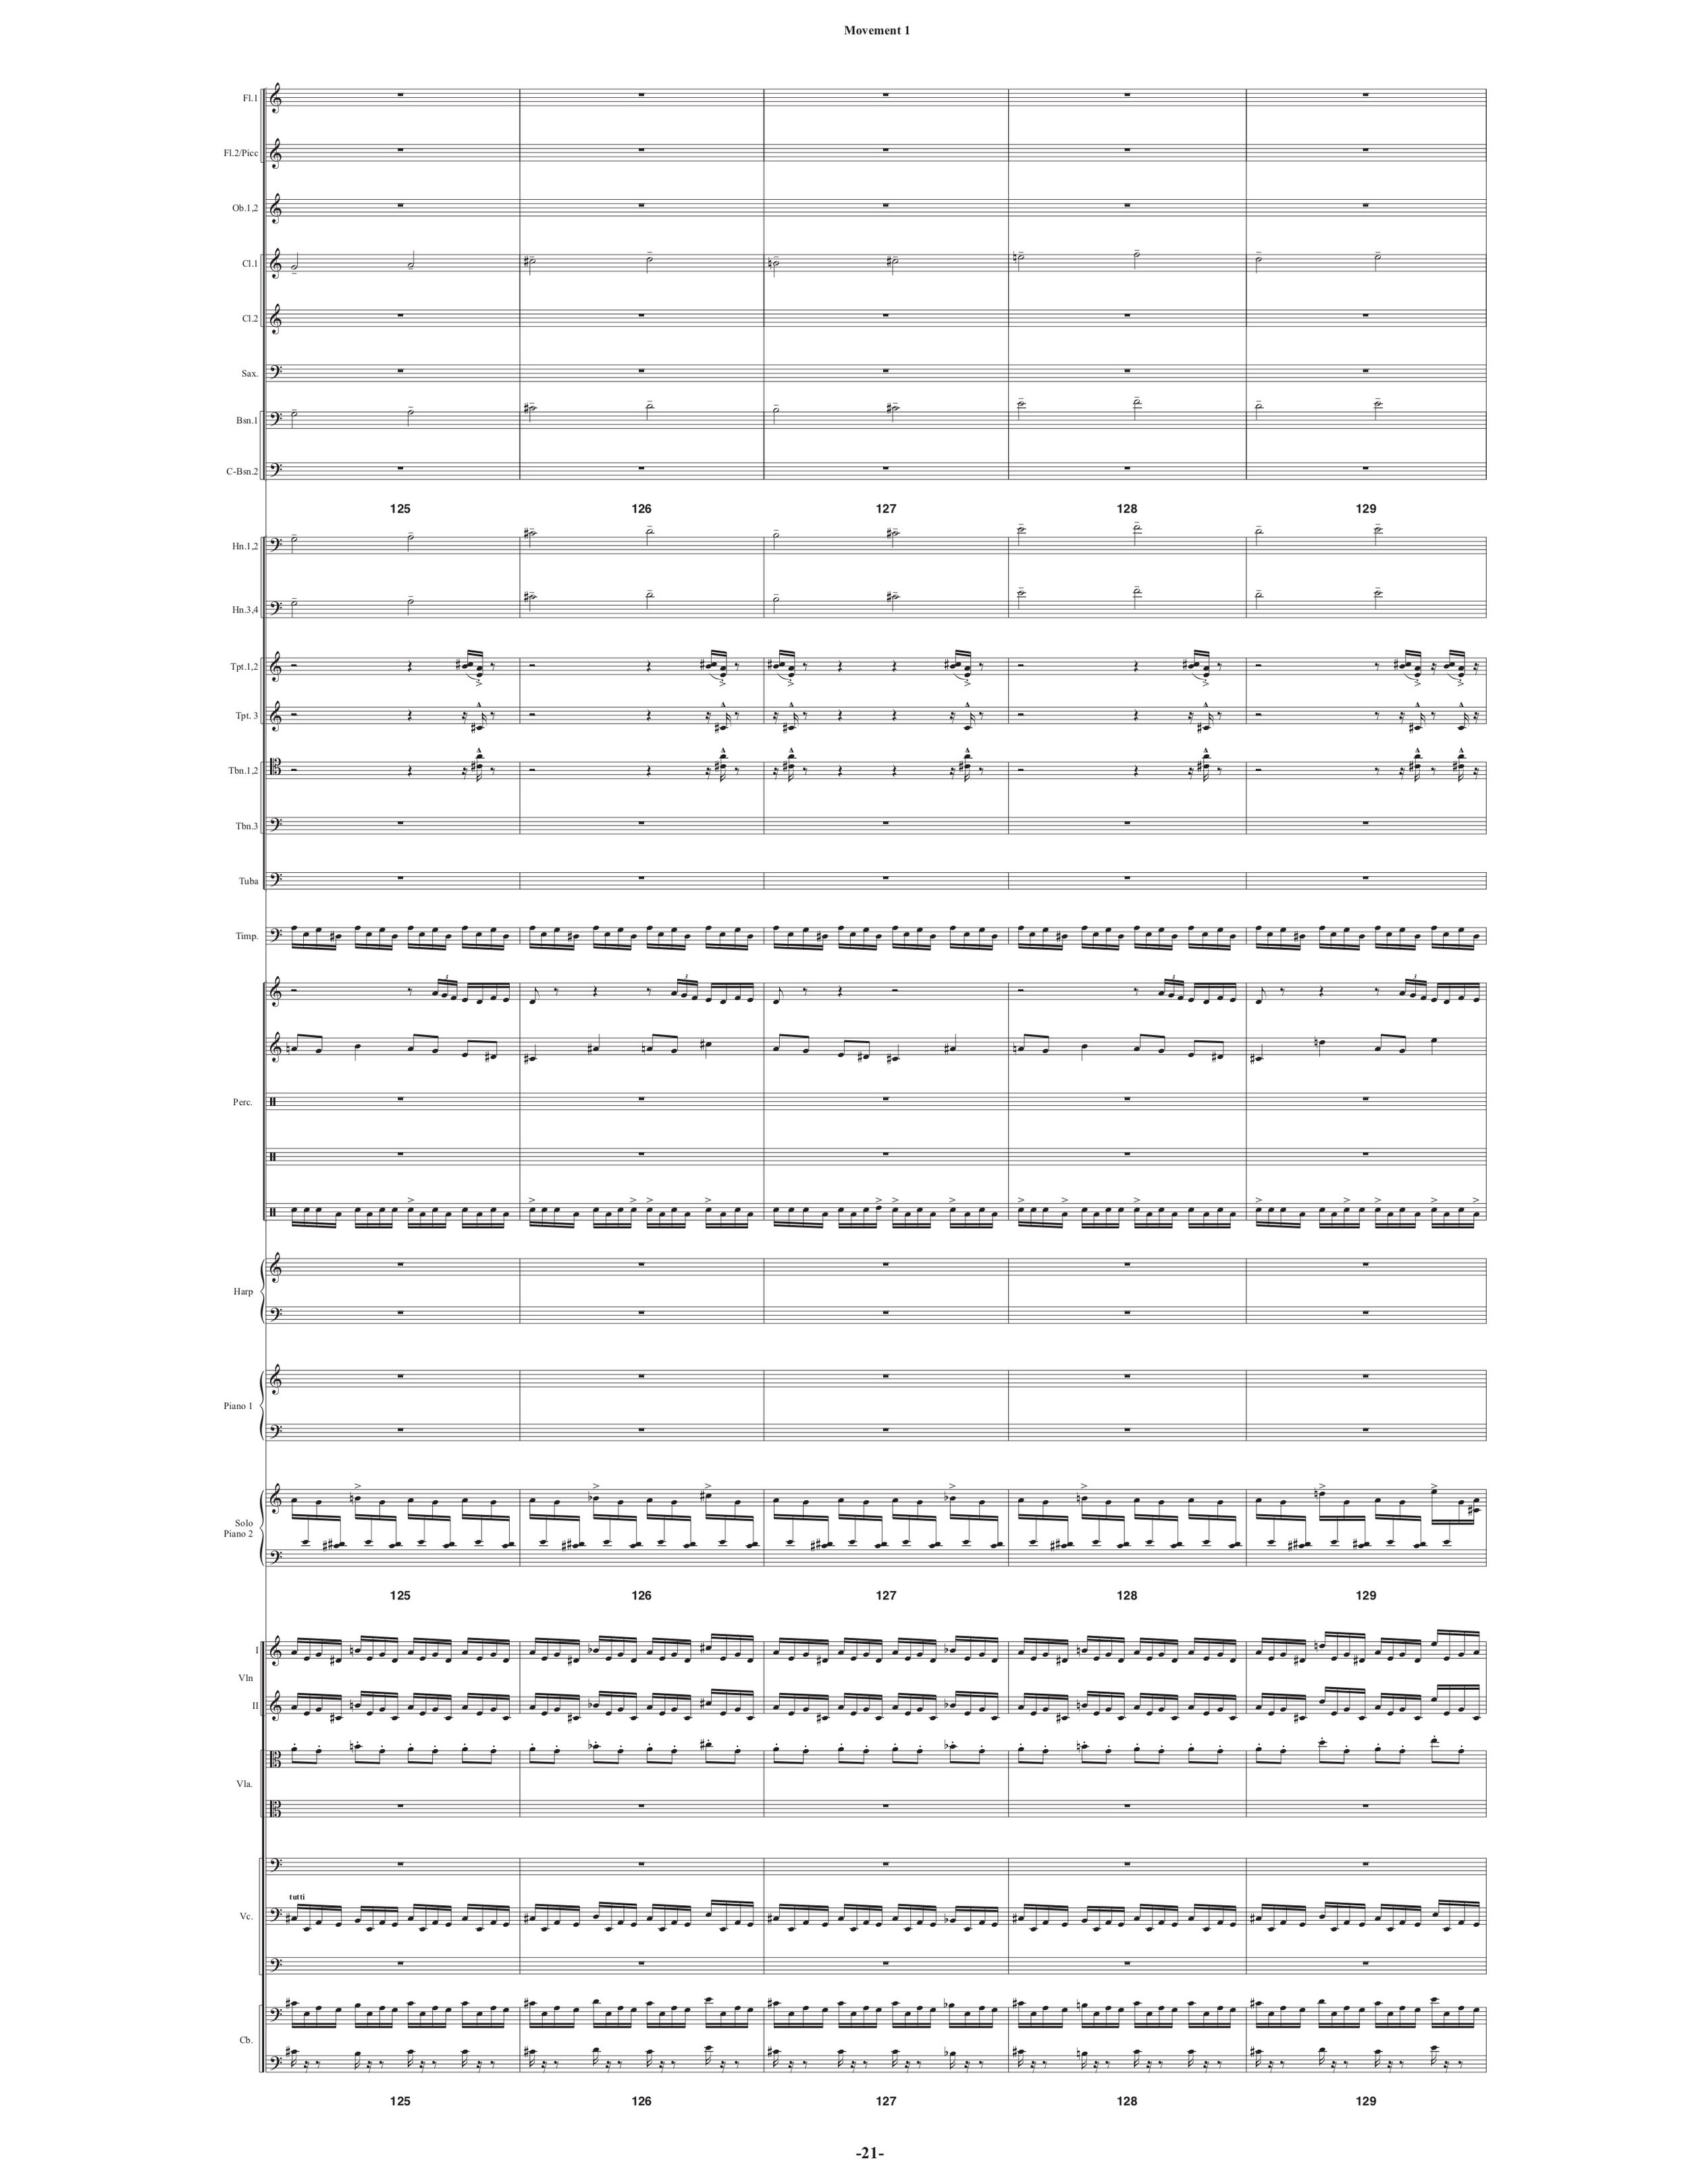 Symphony_Orch & 2 Pianos p26.jpg